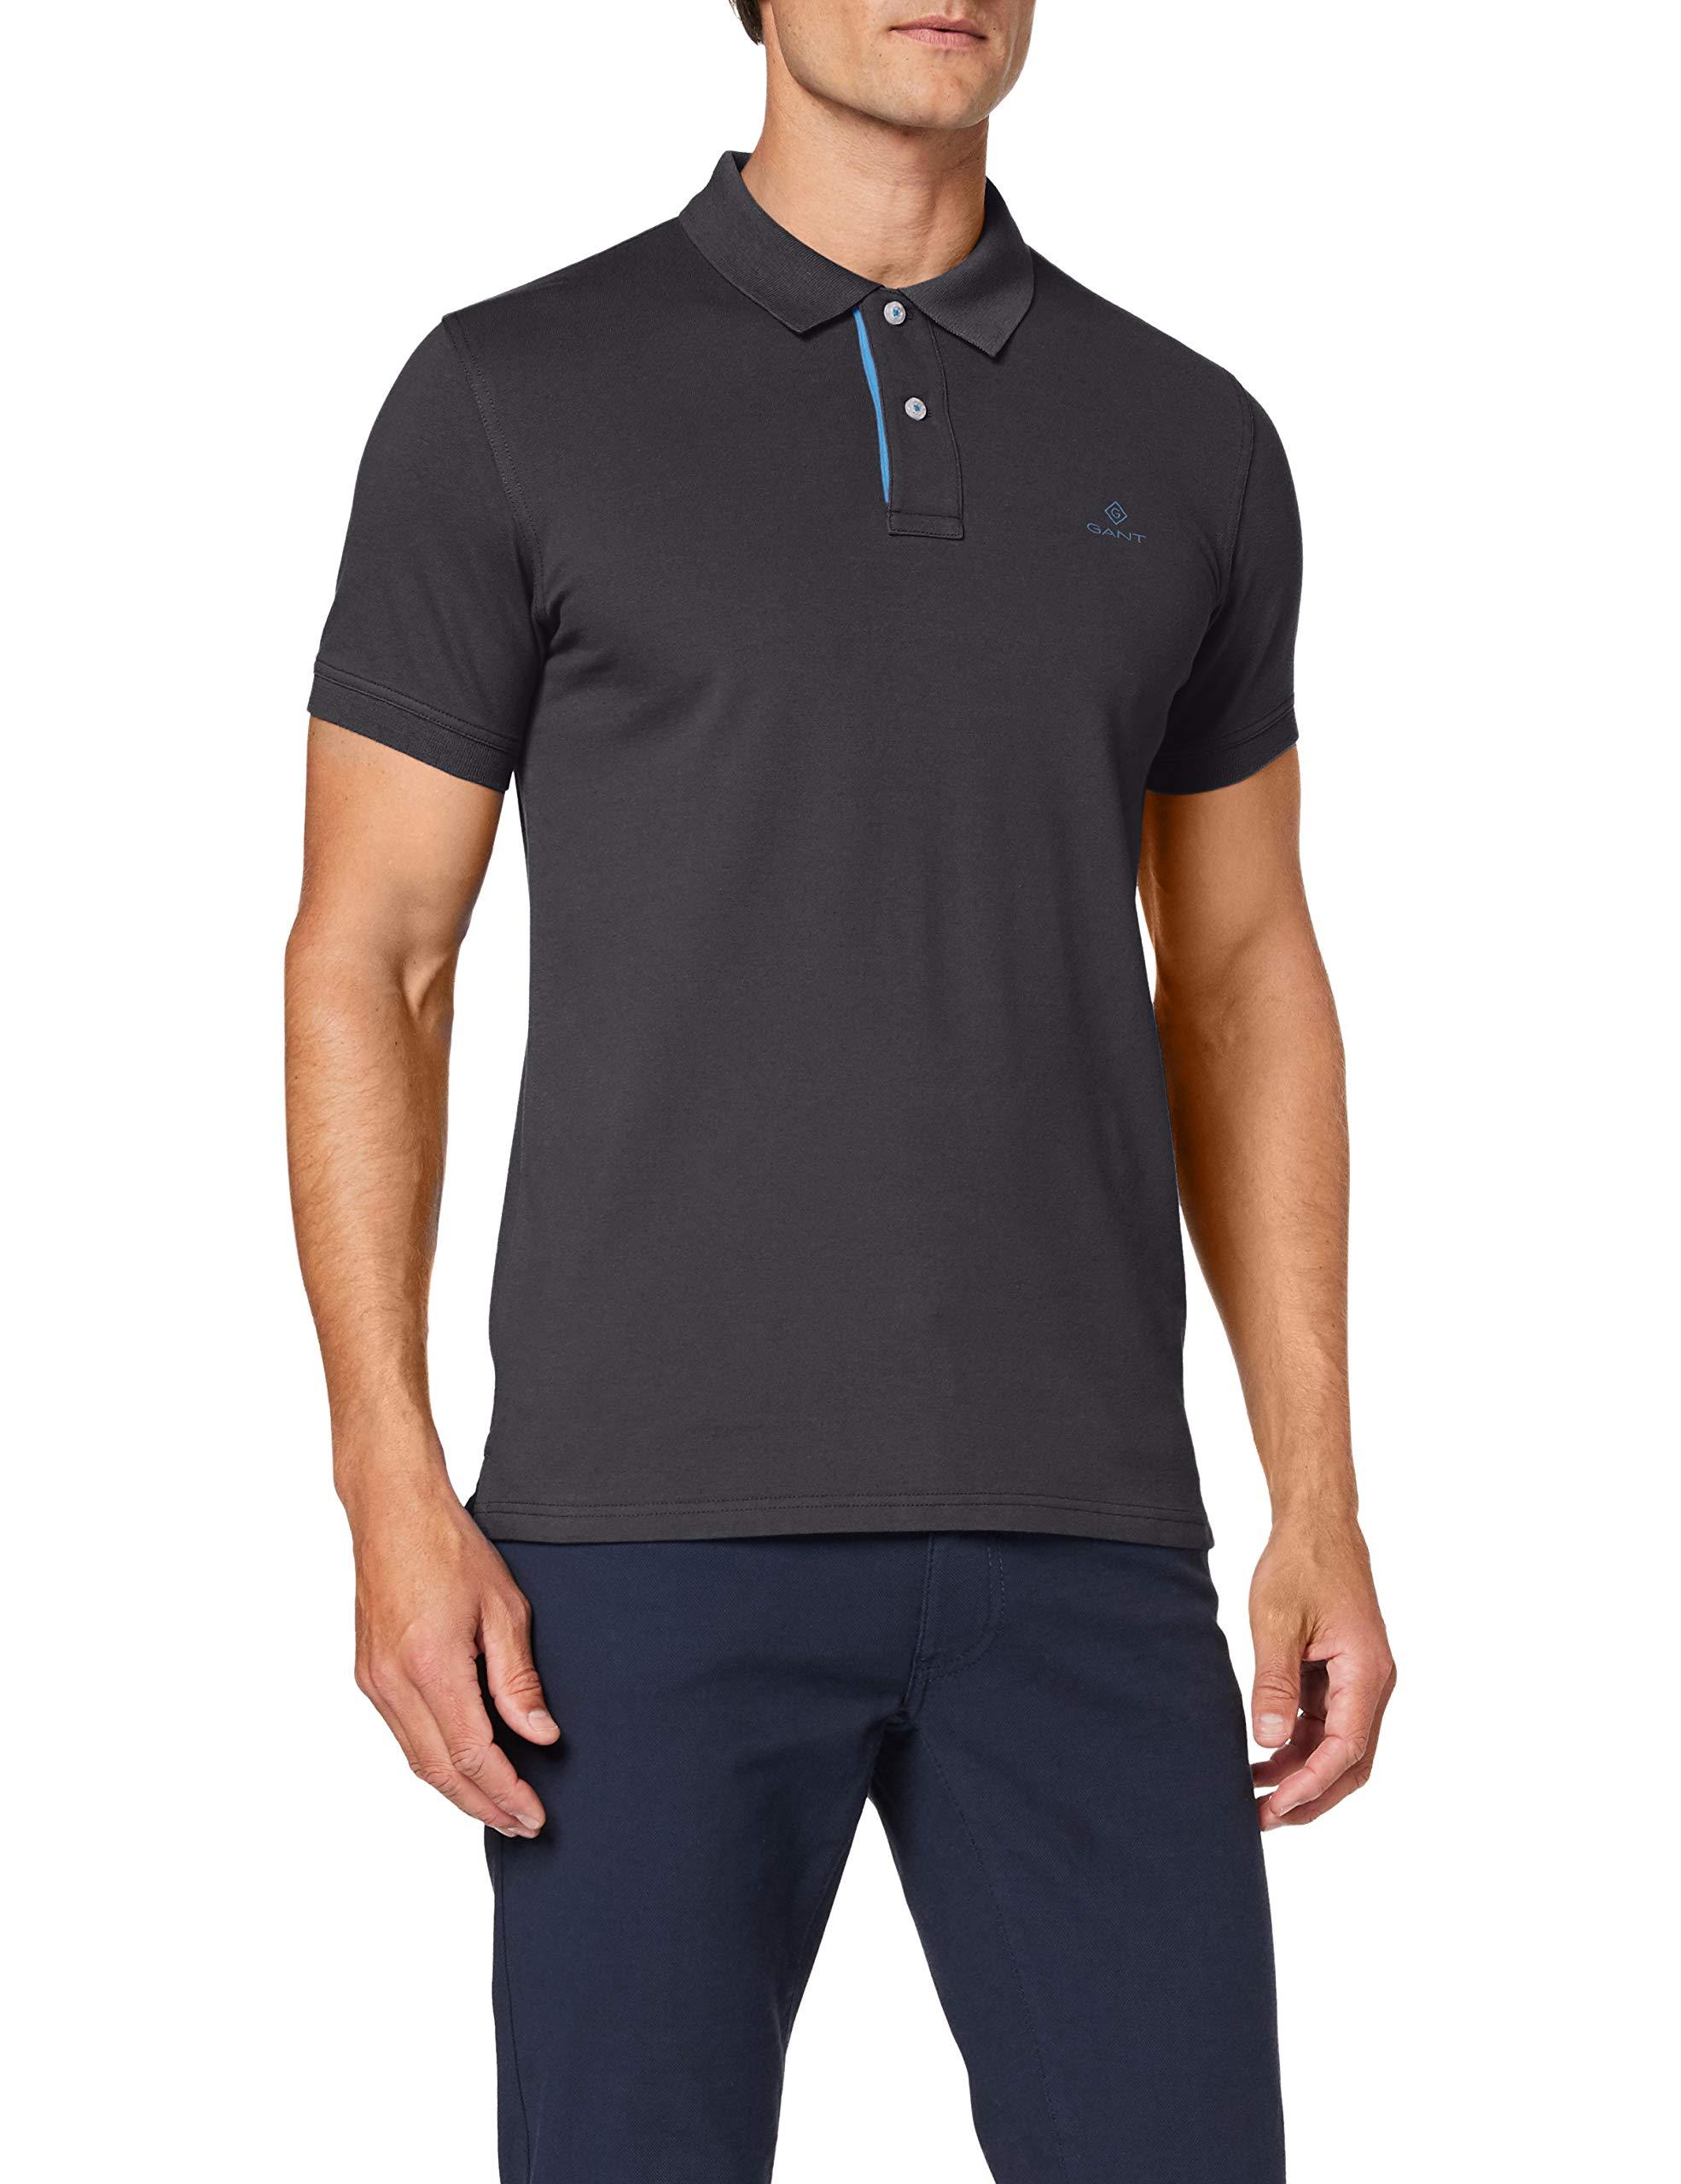 GANT Contrast Collar Pique Ss Rugger Polo Shirt in Grey (Dark Graphite 11)  (Grey) for Men - Save 50% - Lyst